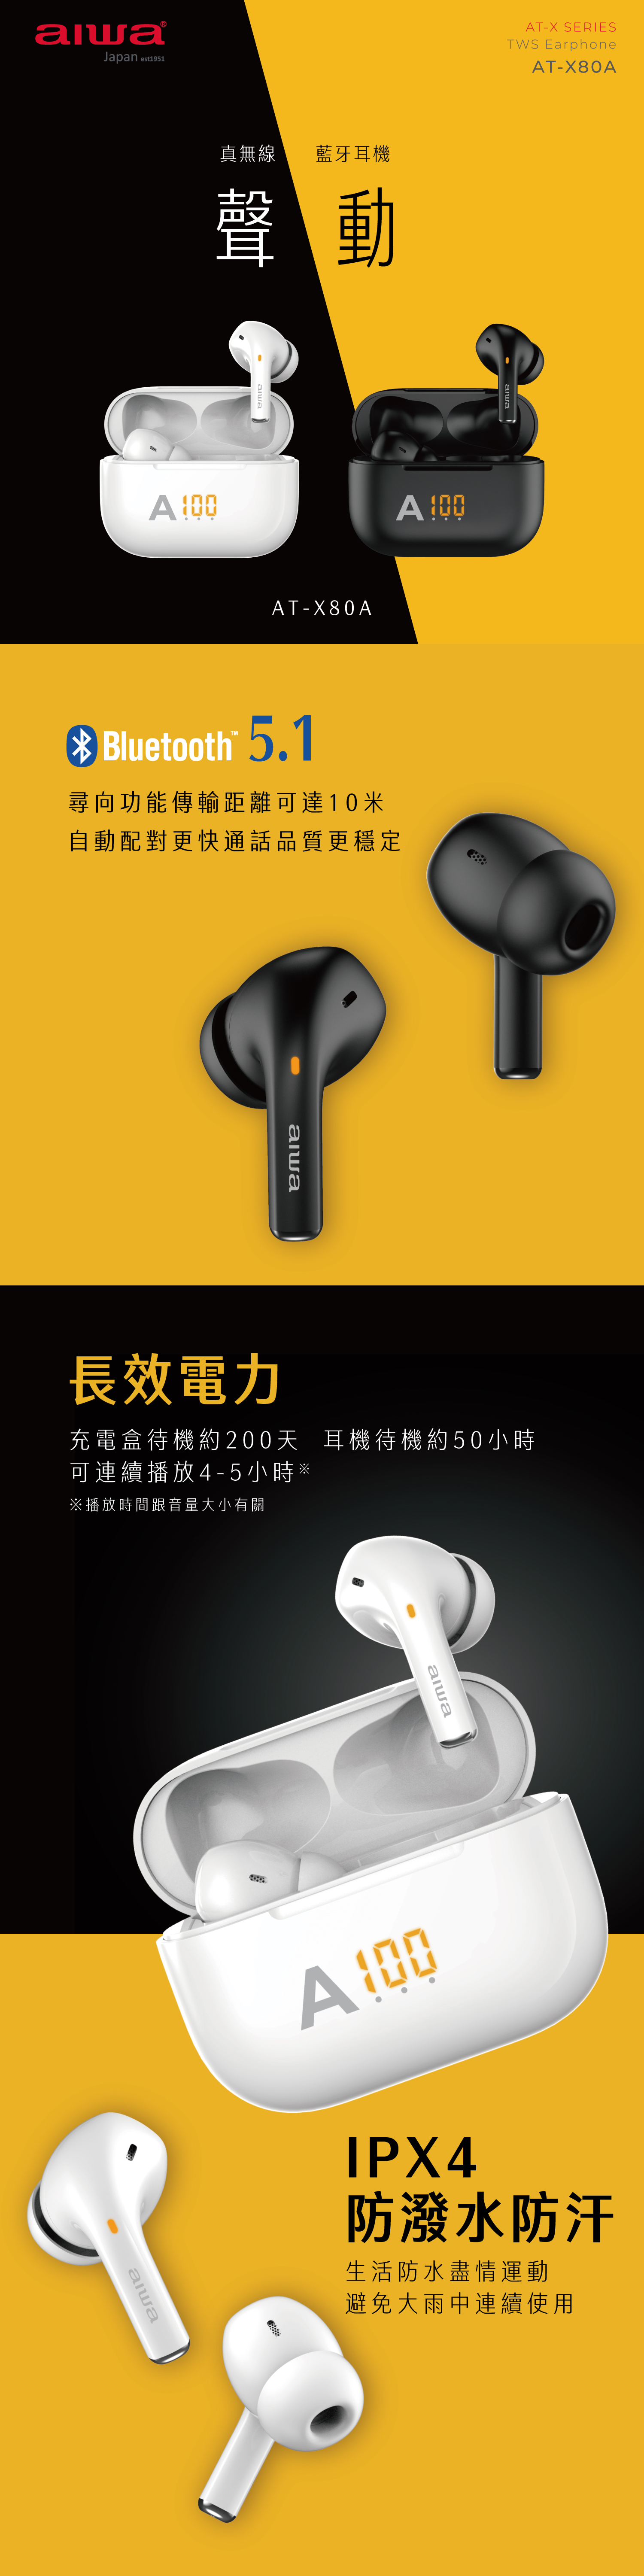 【AIWA愛華】真無線藍芽耳機(AT-X80A) 